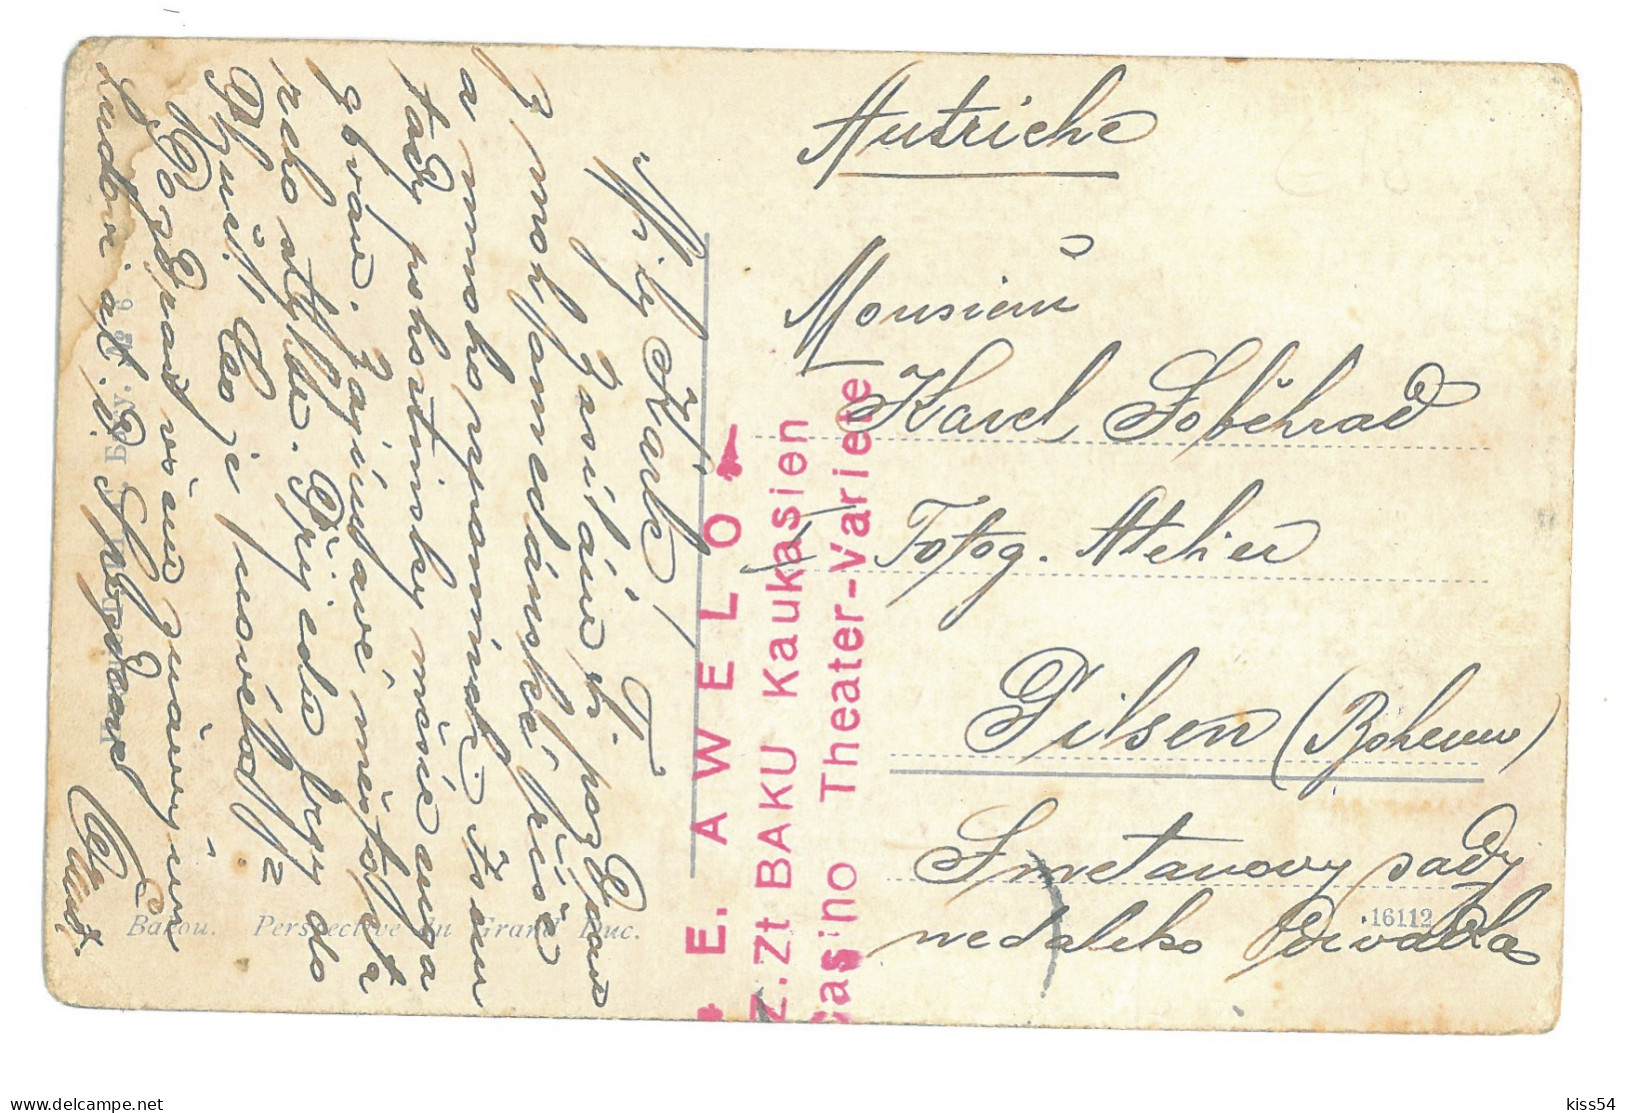 Az 2 - 18598 BAKU, Market & Policeman, Azerbaijan - Old Postcard - Used - TCV - Azerbaigian